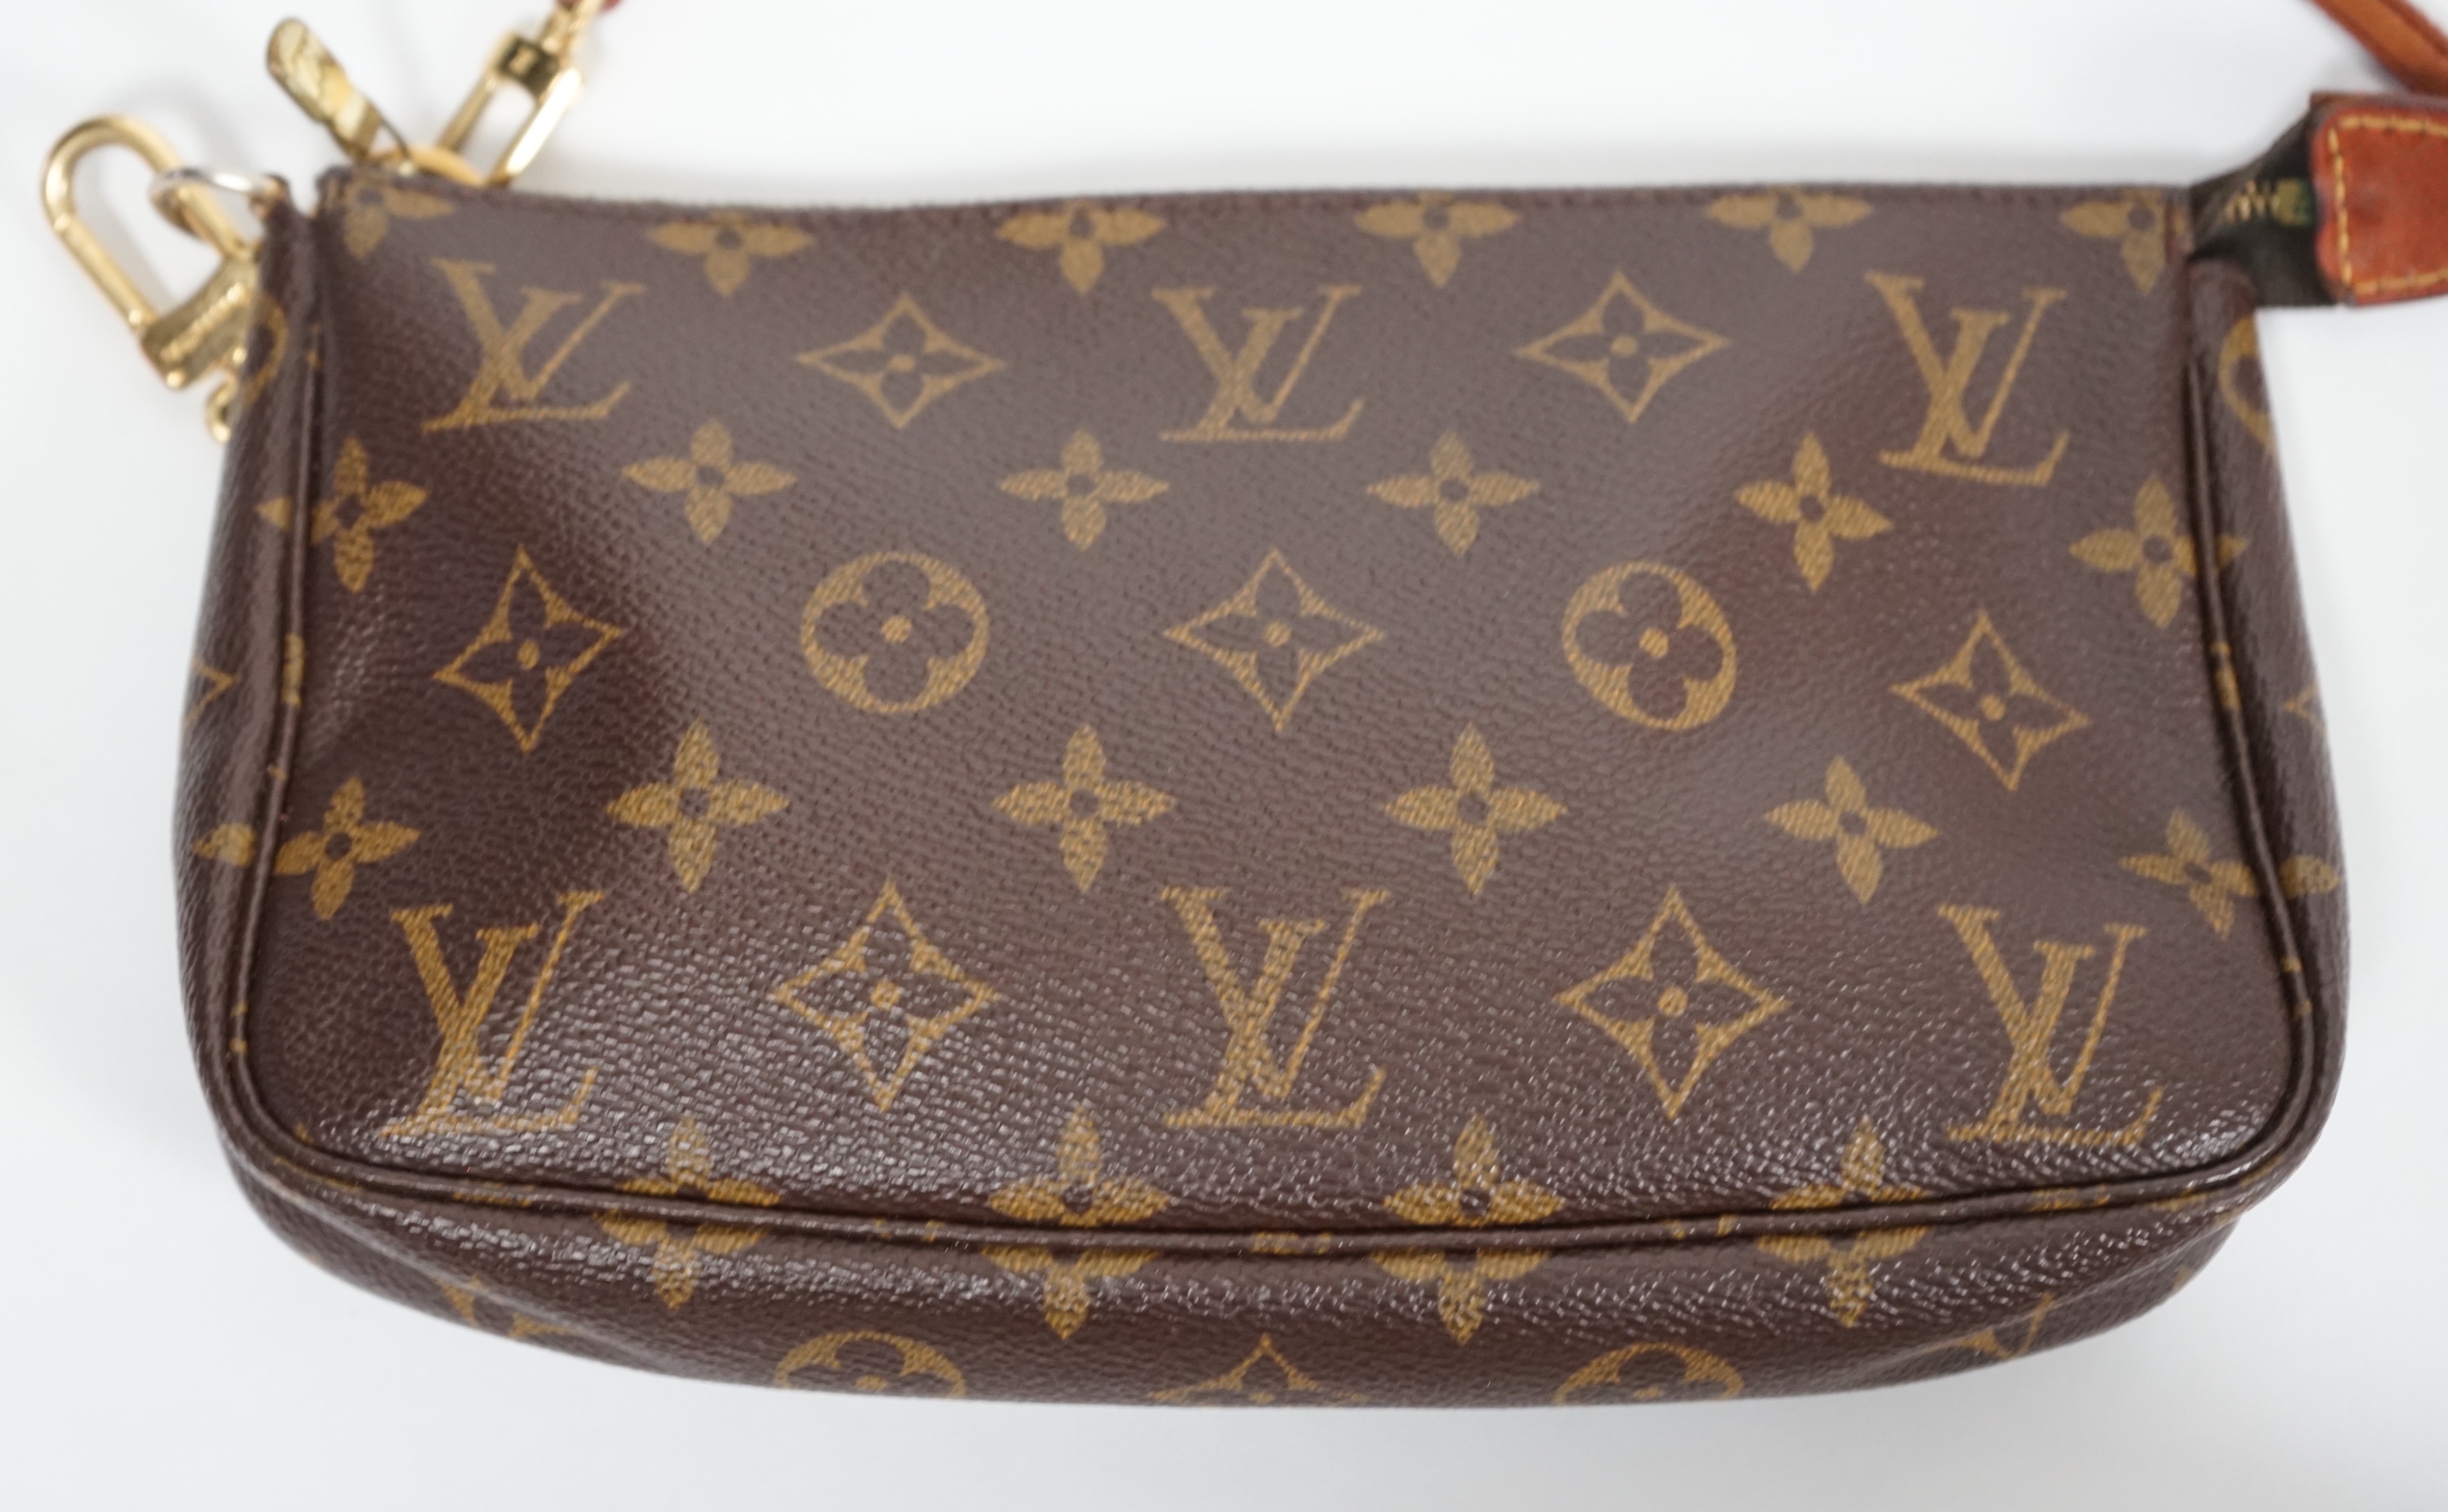 A vintage Louis Vuitton Monogram canvas Speedy 25 handbag, a Louis Vuitton Pochette Accessories Canvas bag and small Agenda PM Speedy bag: width 25cm, height overall 29cmm depth15cm, Pochette Bag: width 22cm, height 13cm